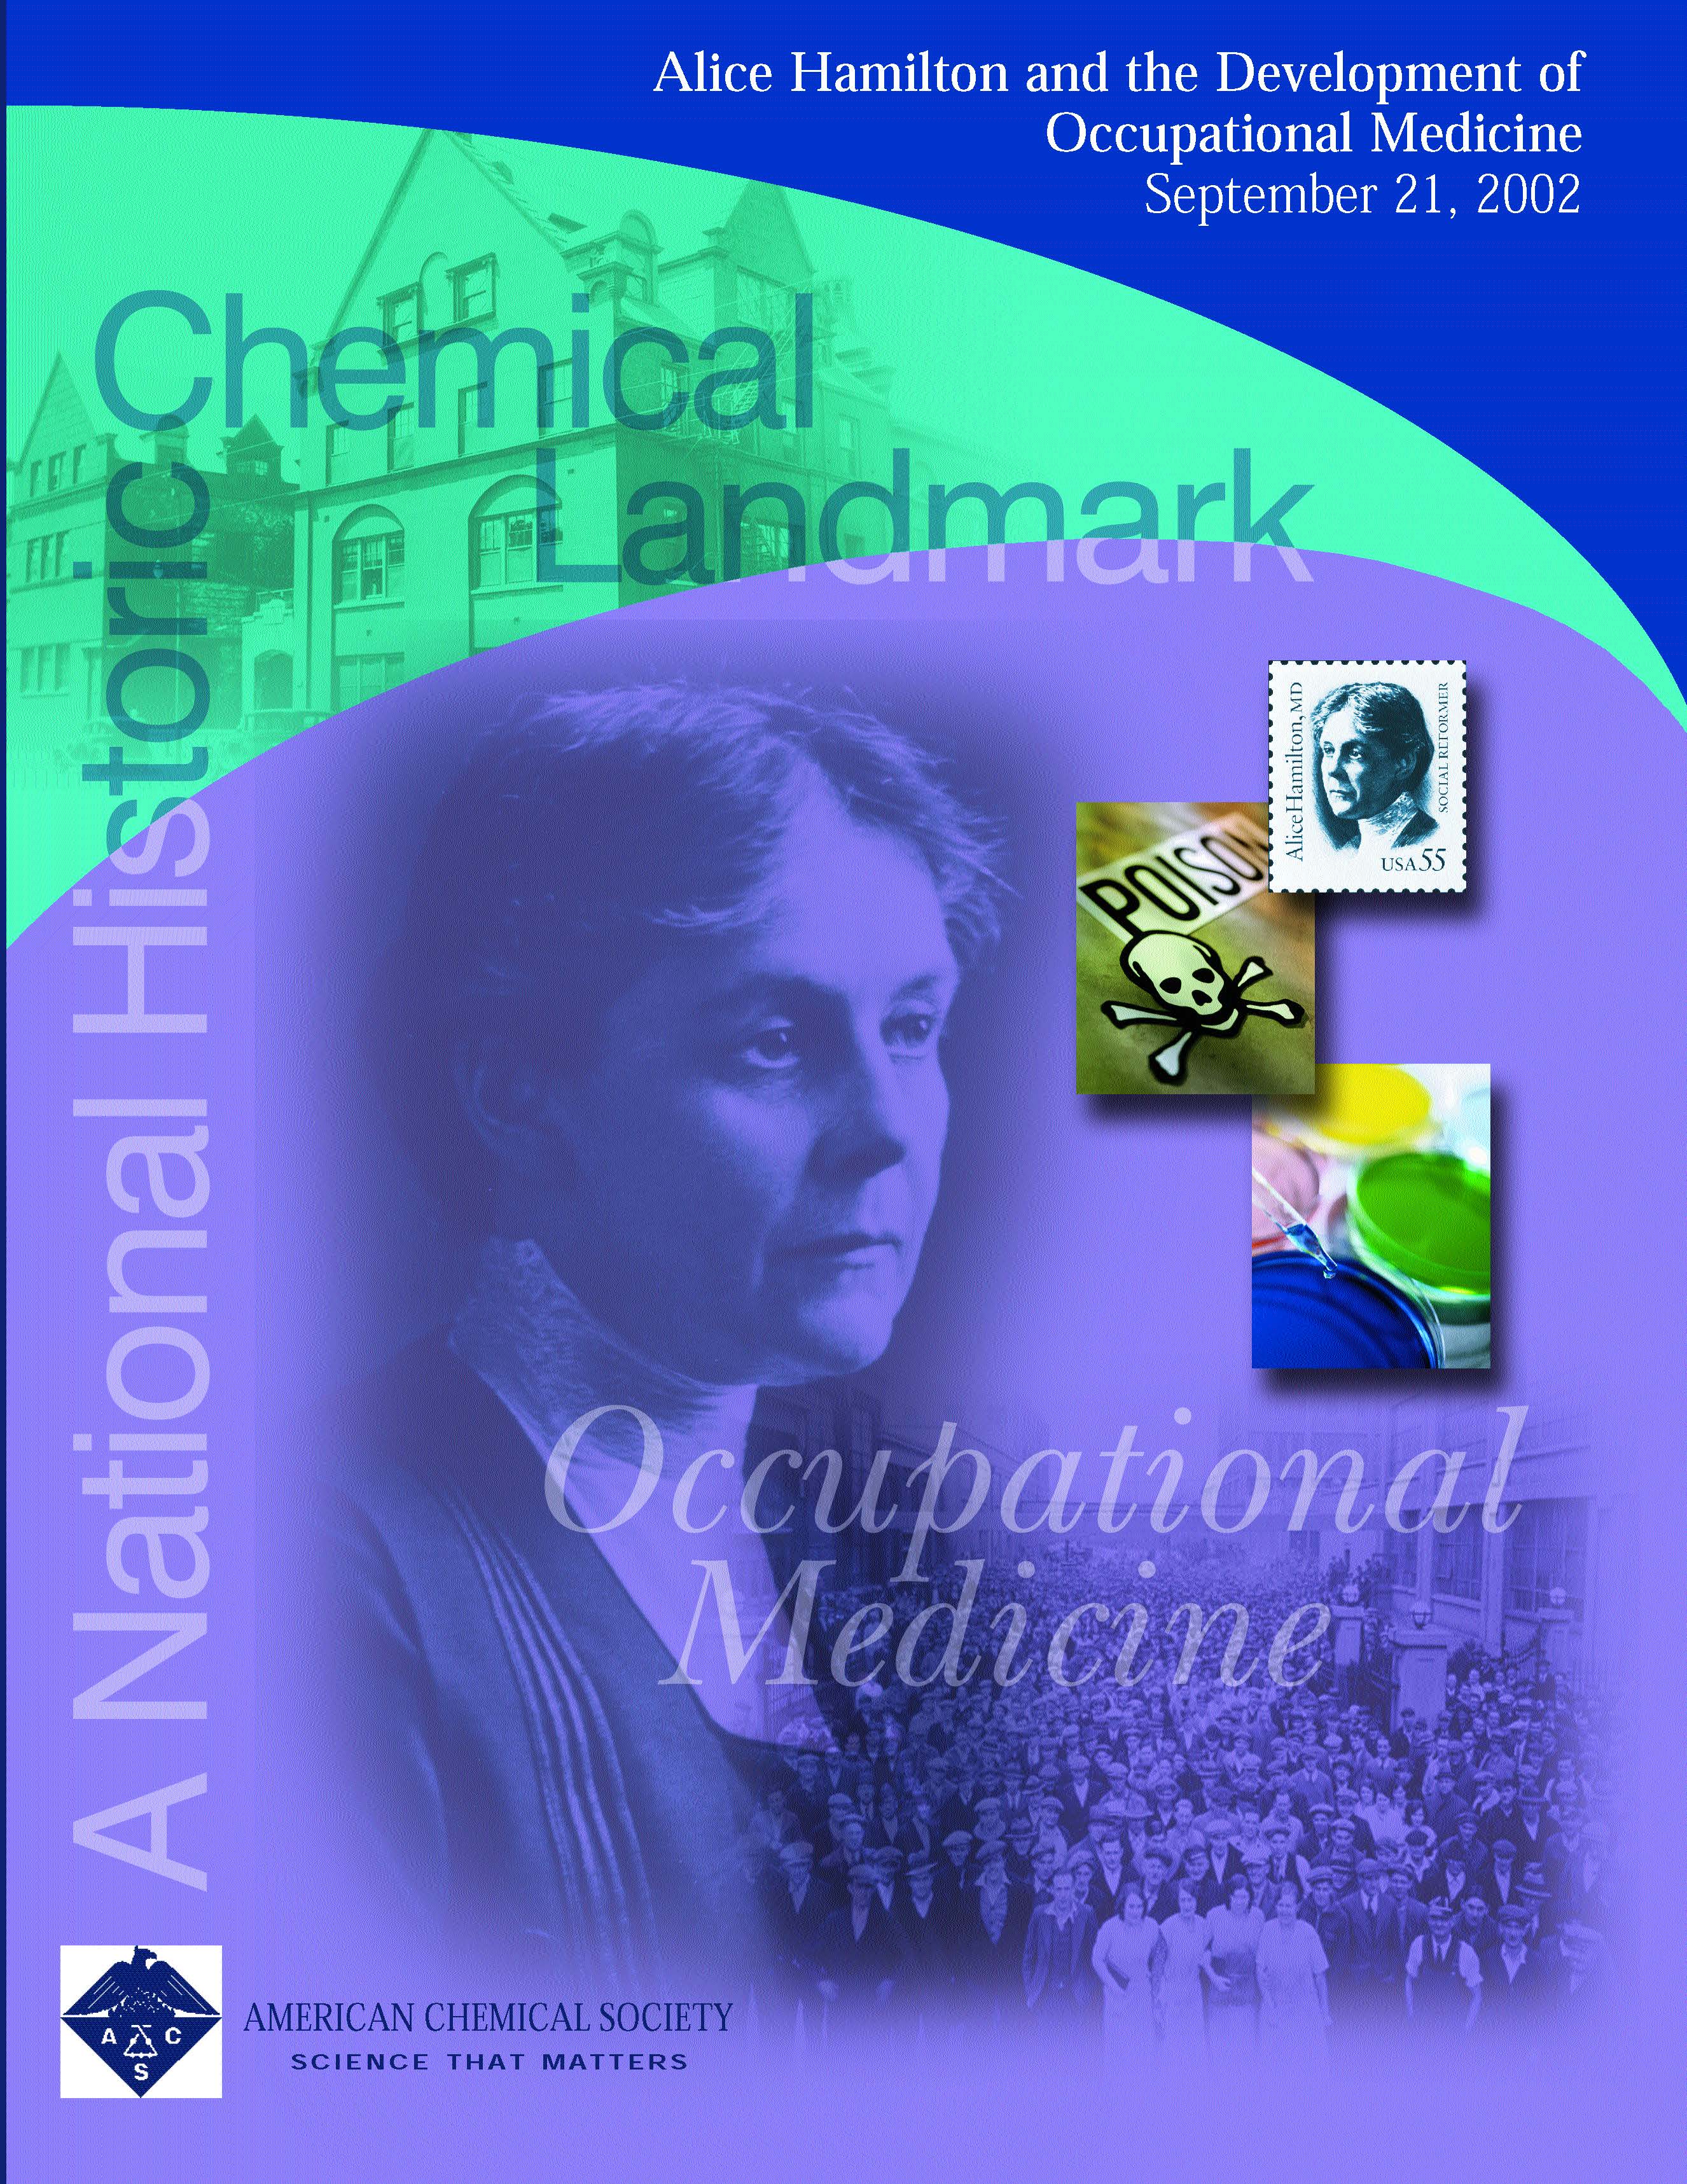 “Alice Hamilton and the Development of Occupational Medicine” commemorative booklet 